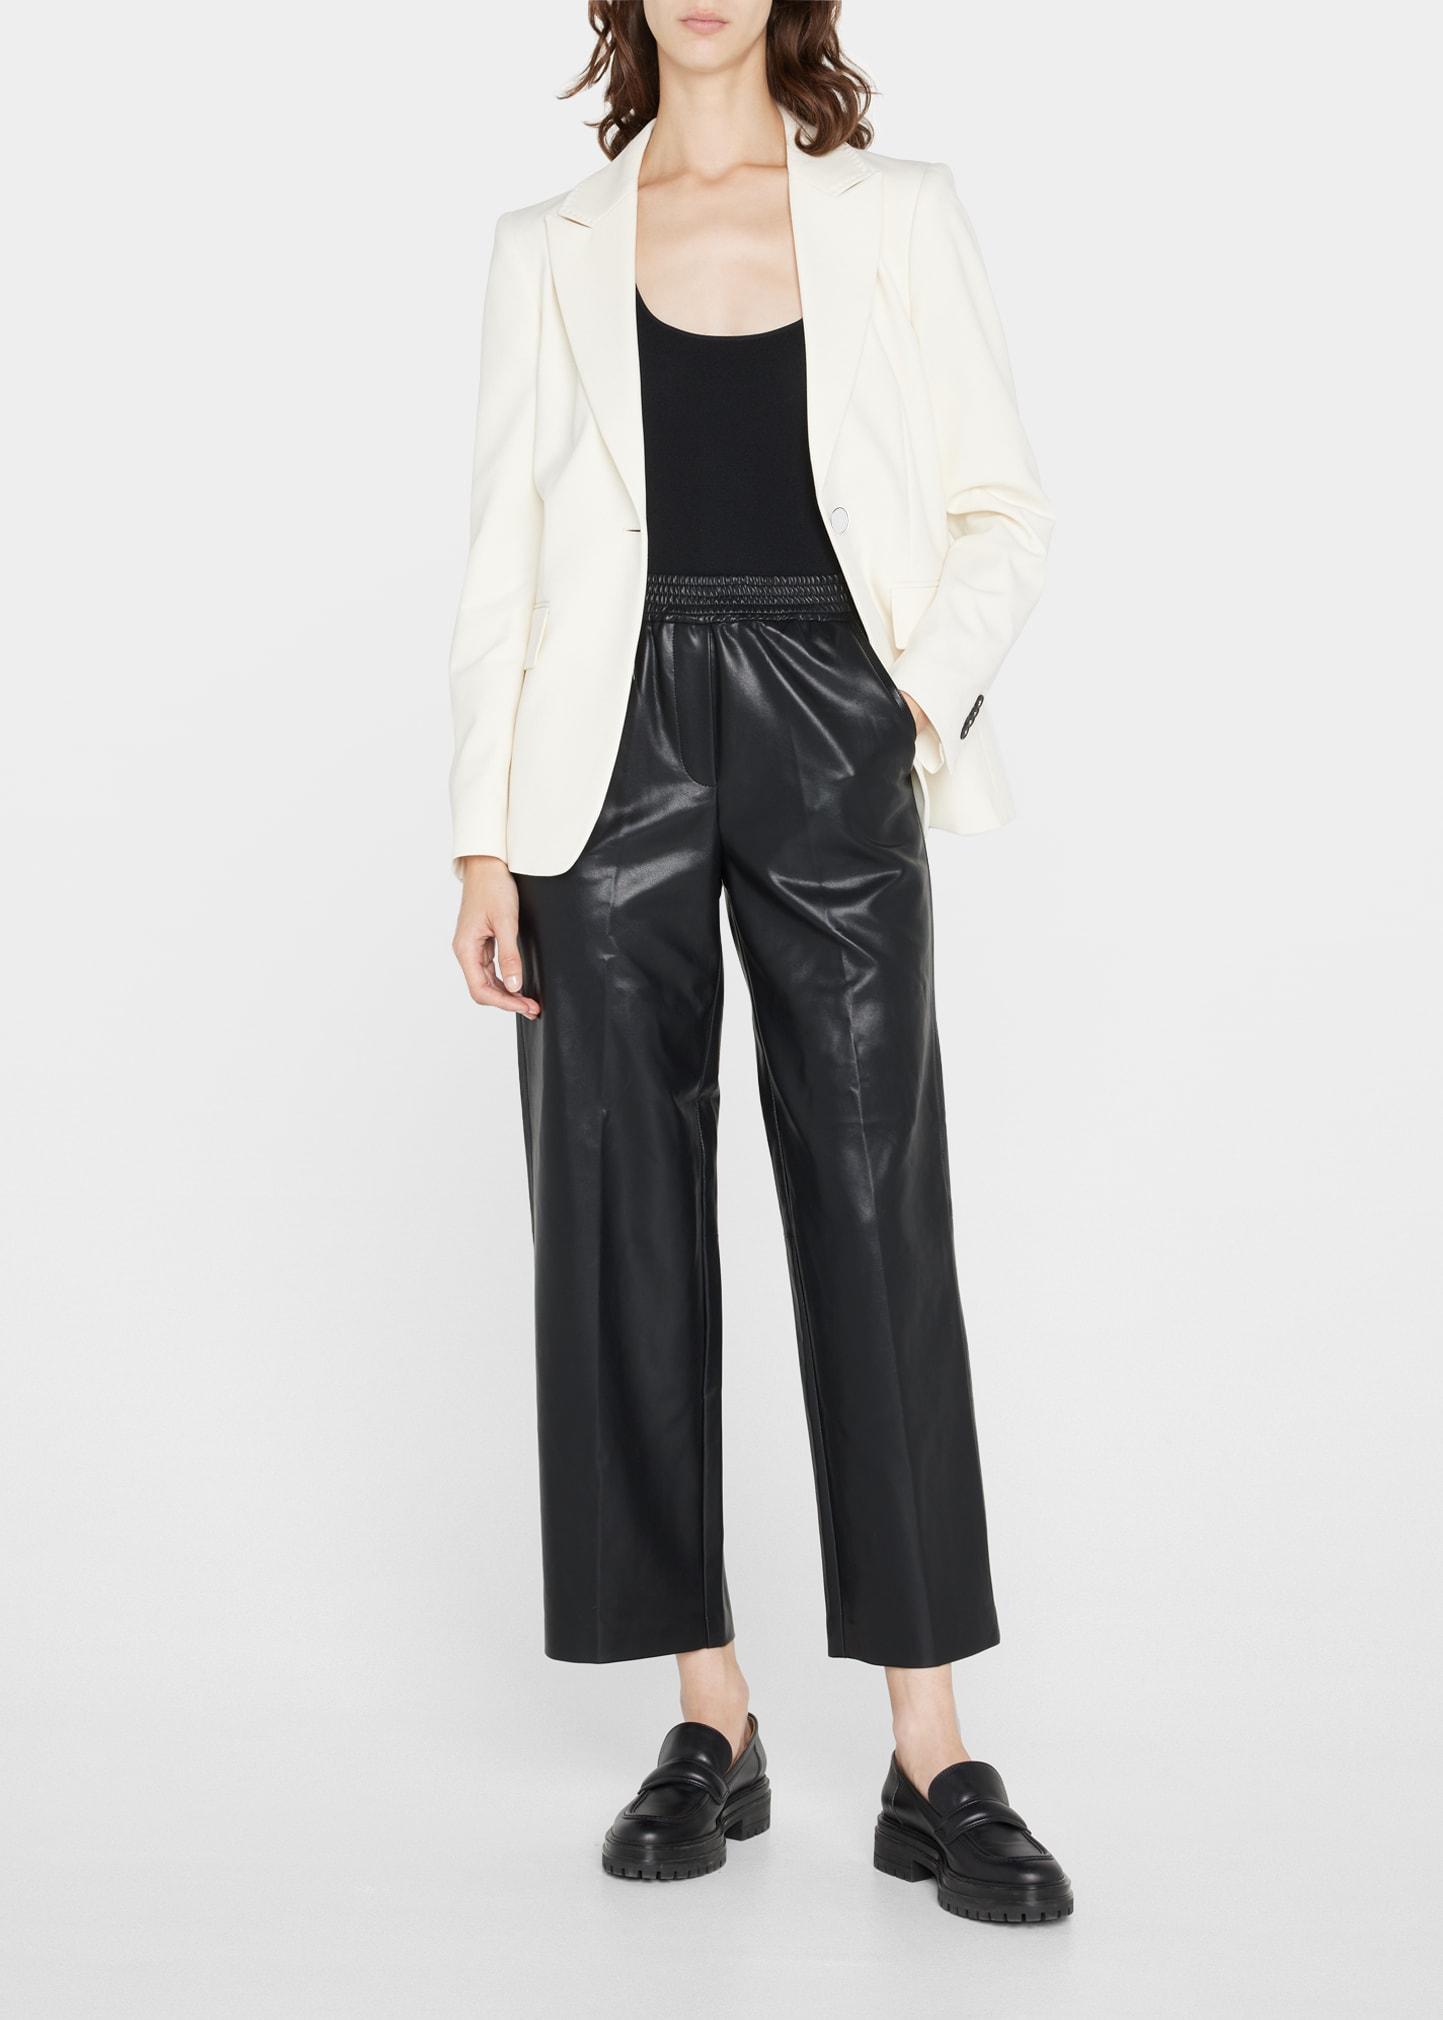 Kobi Halperin Ariella Cropped Faux-leather Pants in White | Lyst